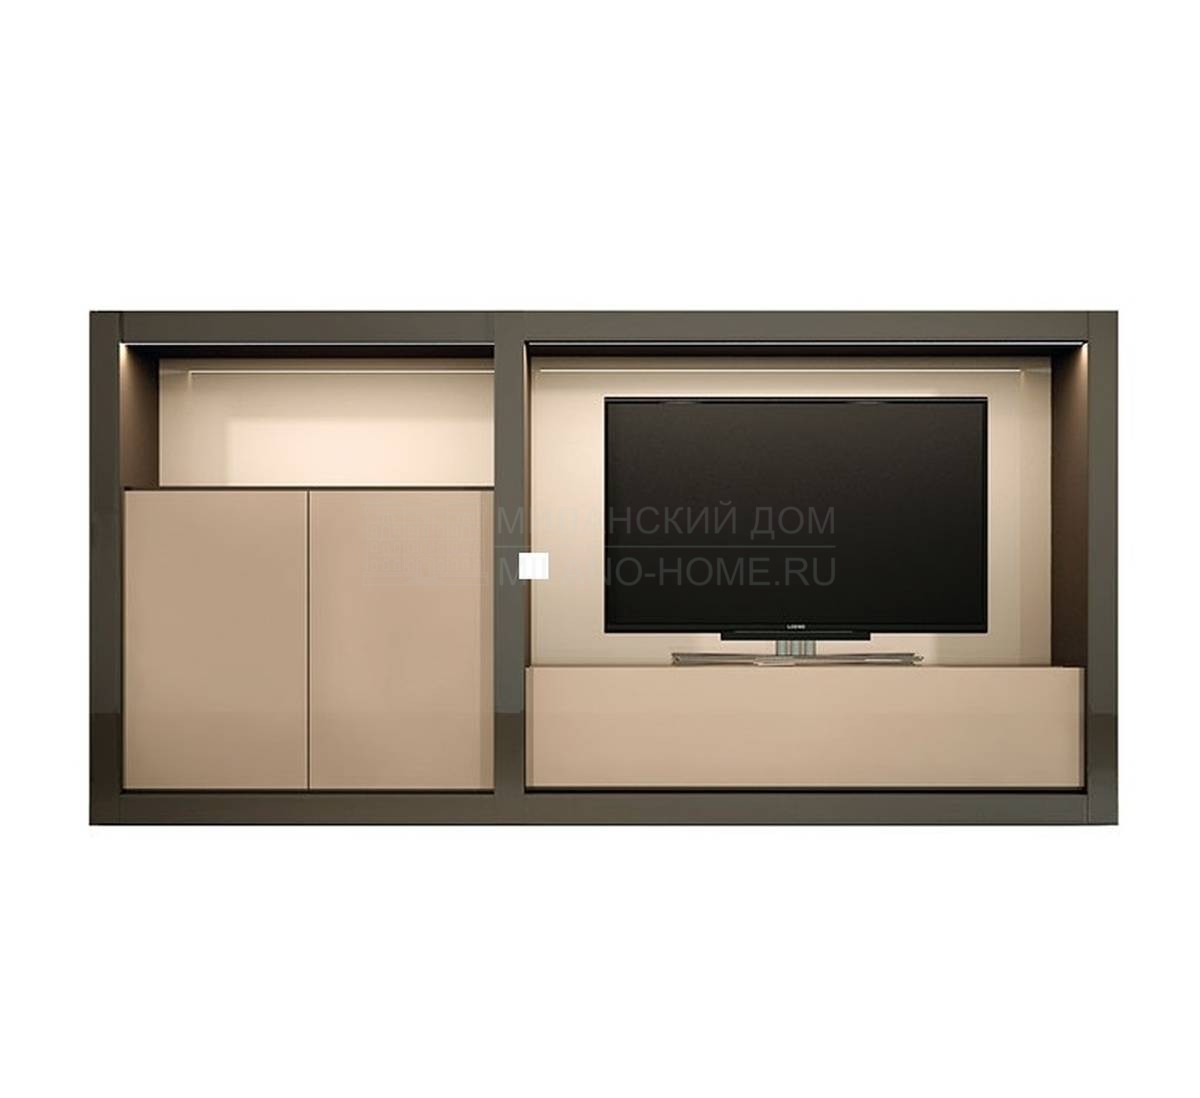 Мебель для ТВ Avantgarde Luce Collezione из Италии фабрики REFLEX ANGELO